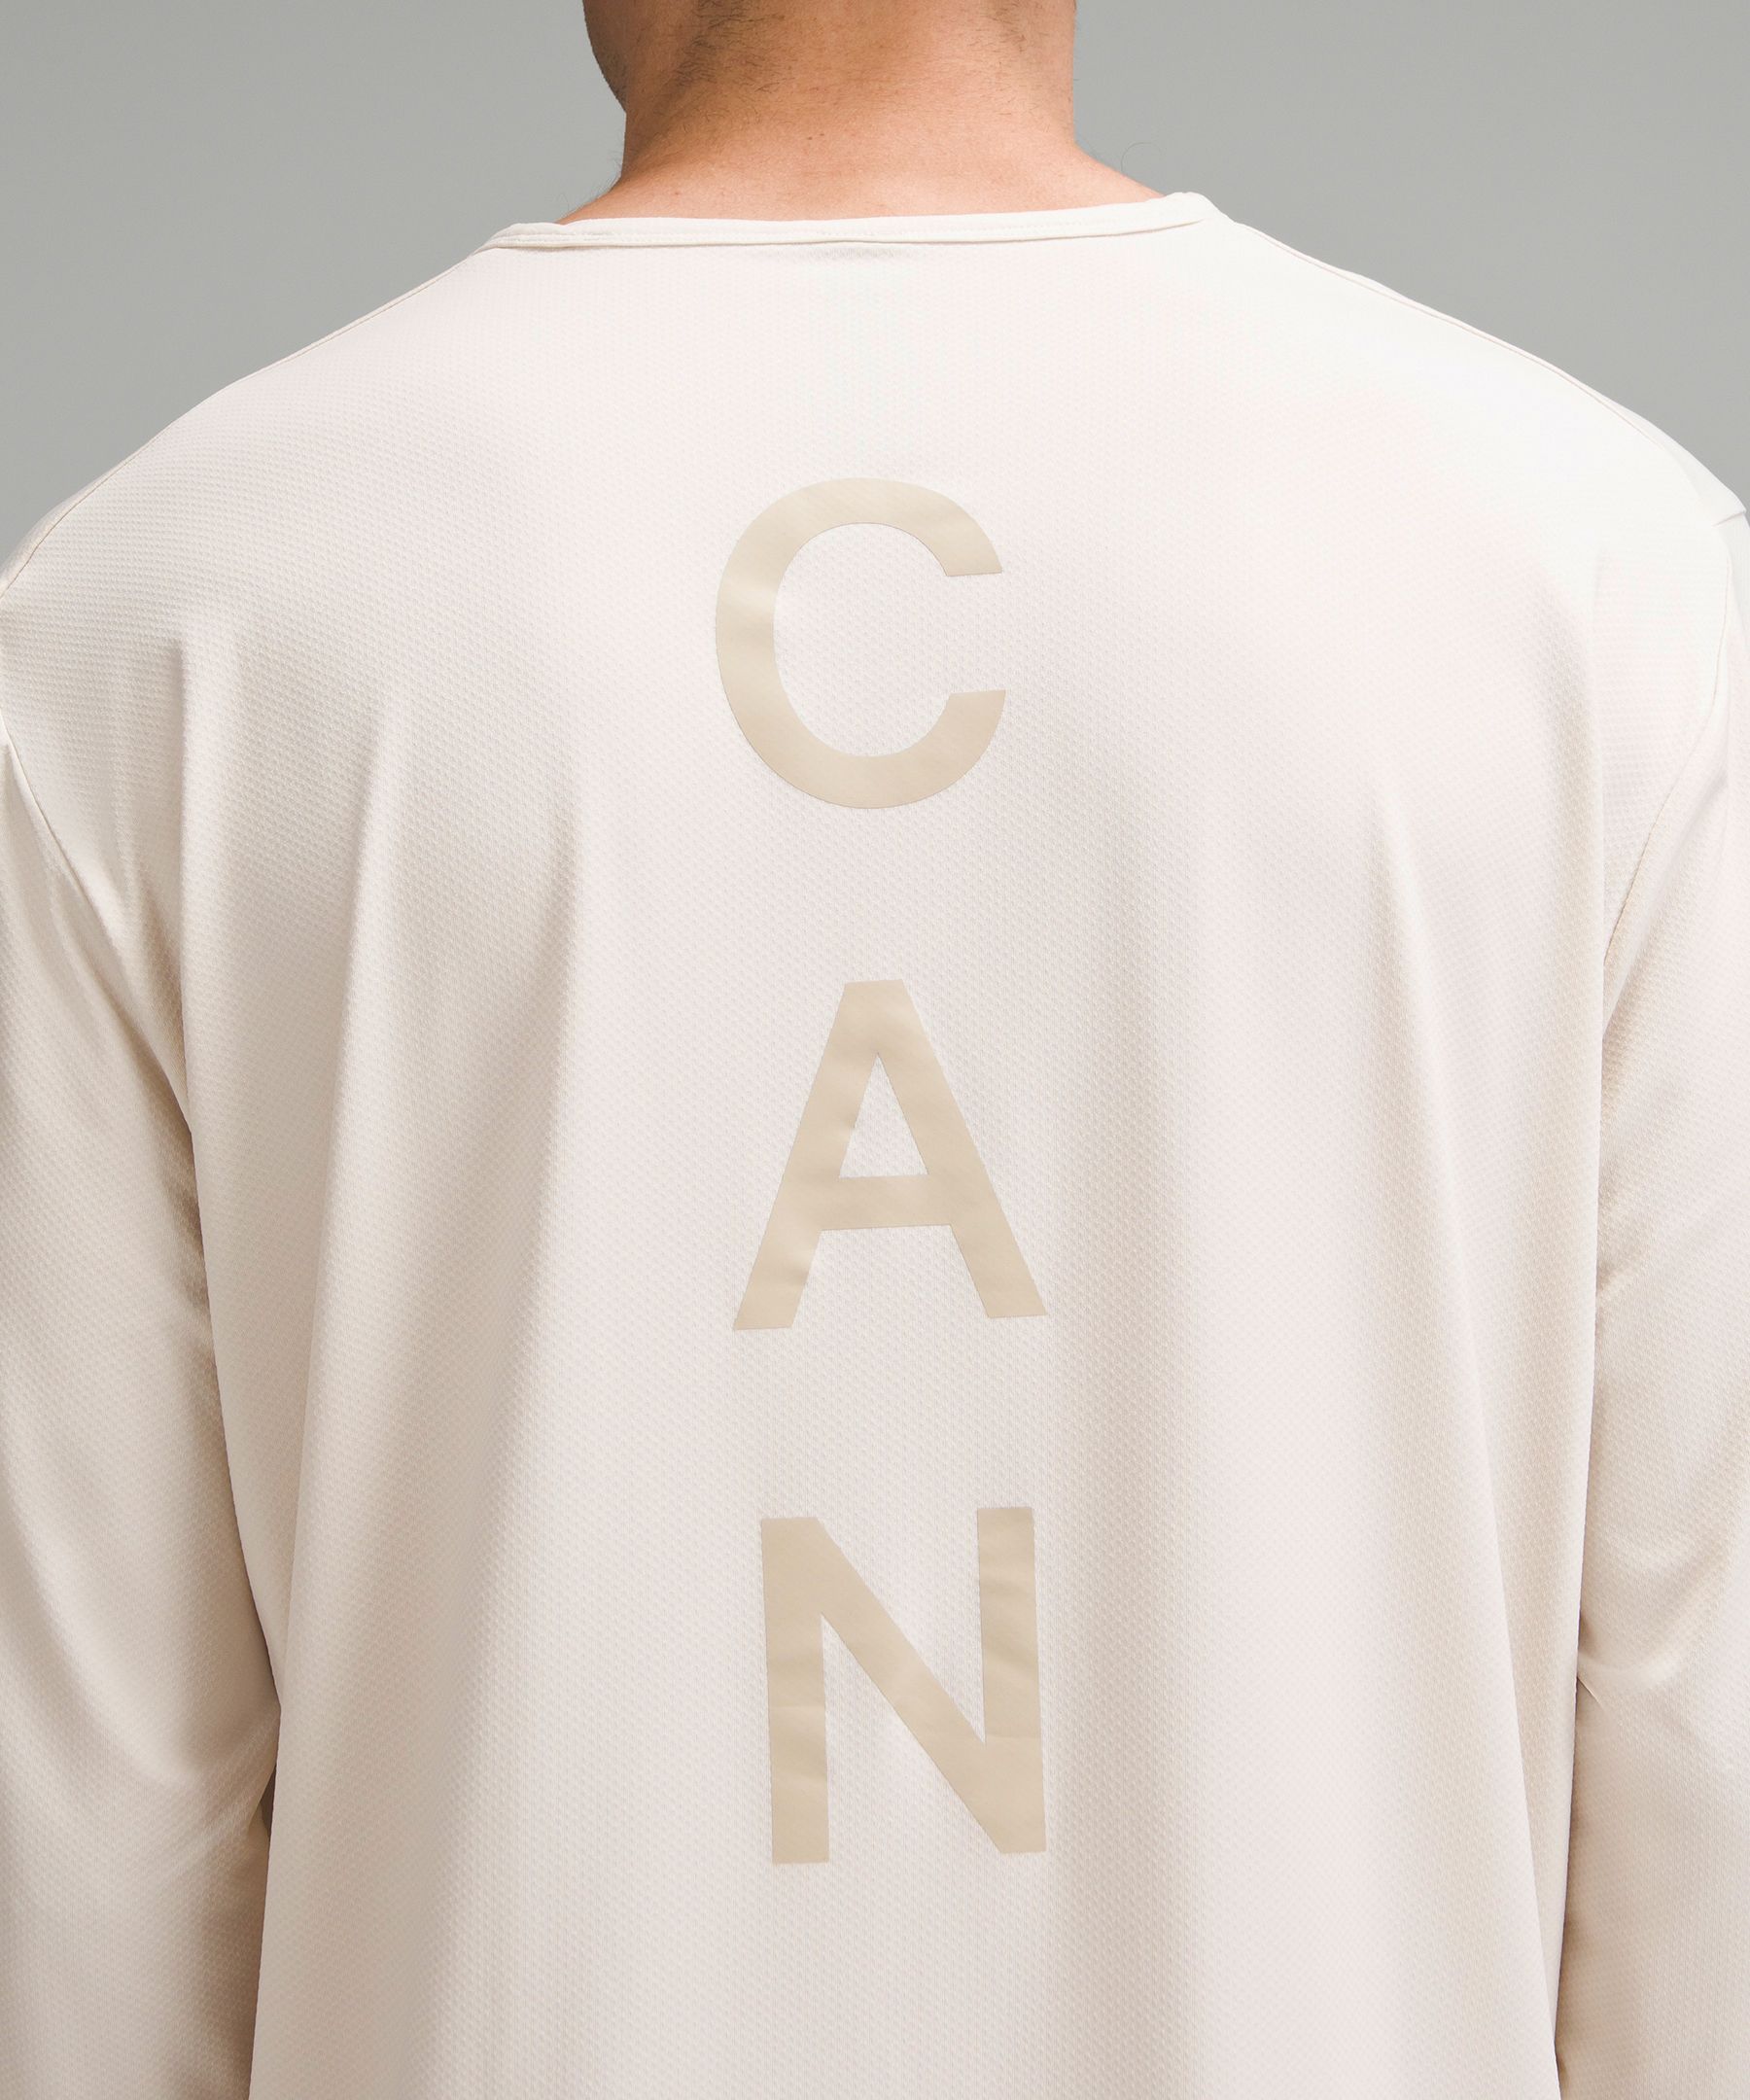 Team Canada lululemon Fundamental Jacquard Long-Sleeve Shirt *COC Logo | Men's Long Sleeve Shirts